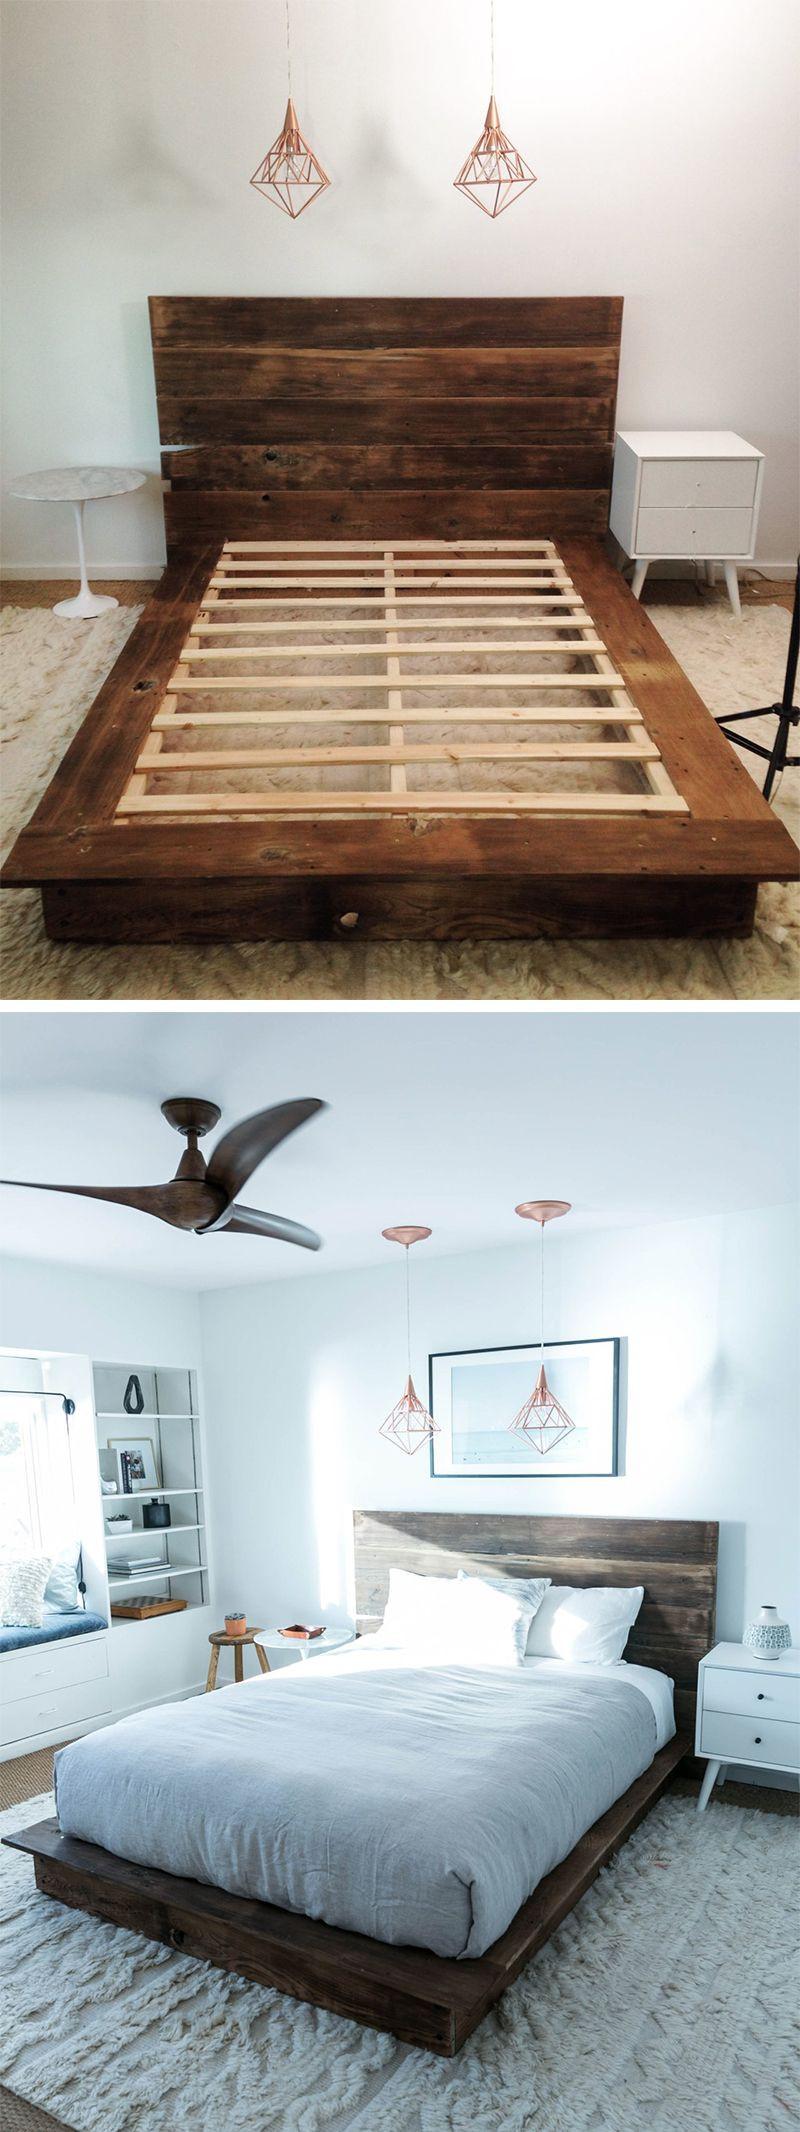 Best ideas about DIY Wood Platform Bed
. Save or Pin DIY Reclaimed Wood Platform Bed Now.